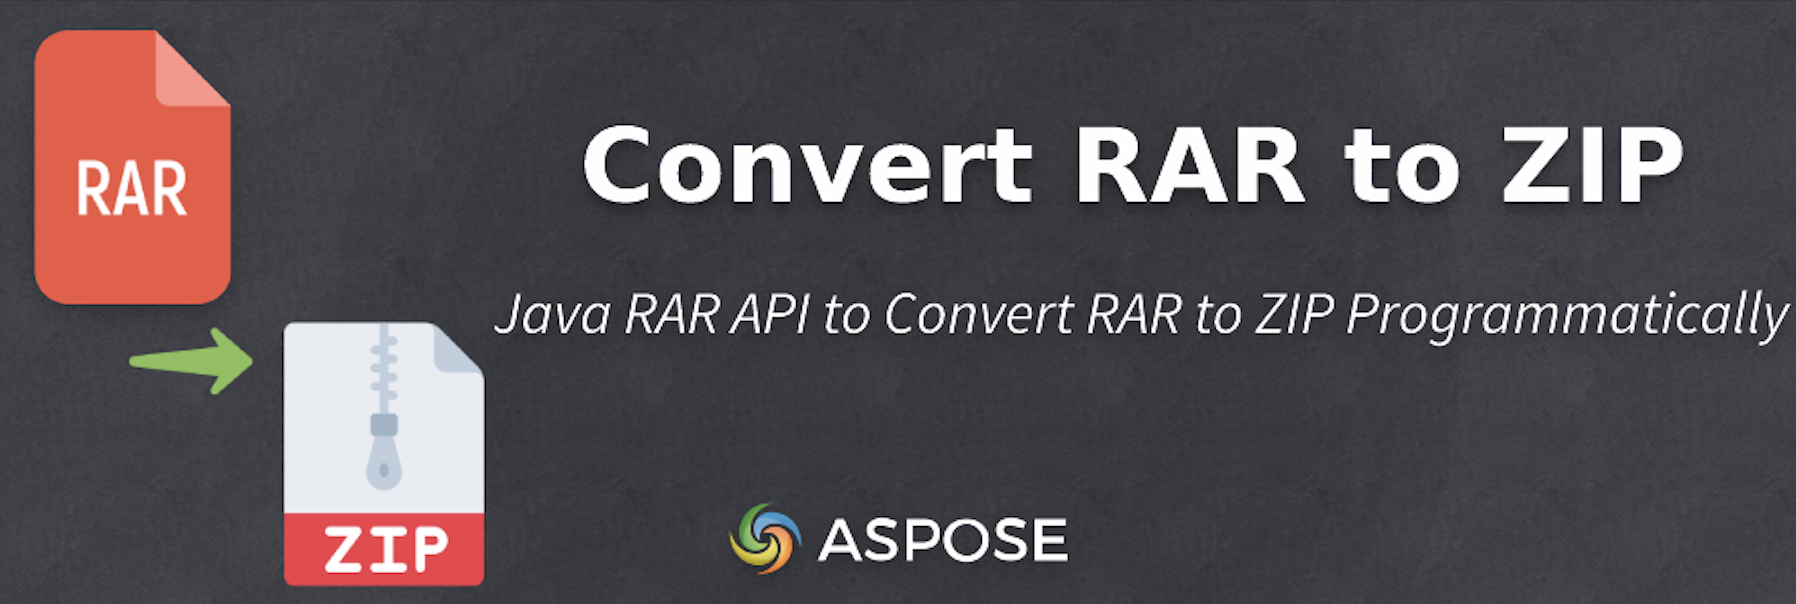 Converti RAR in ZIP in Java - API Java RAR